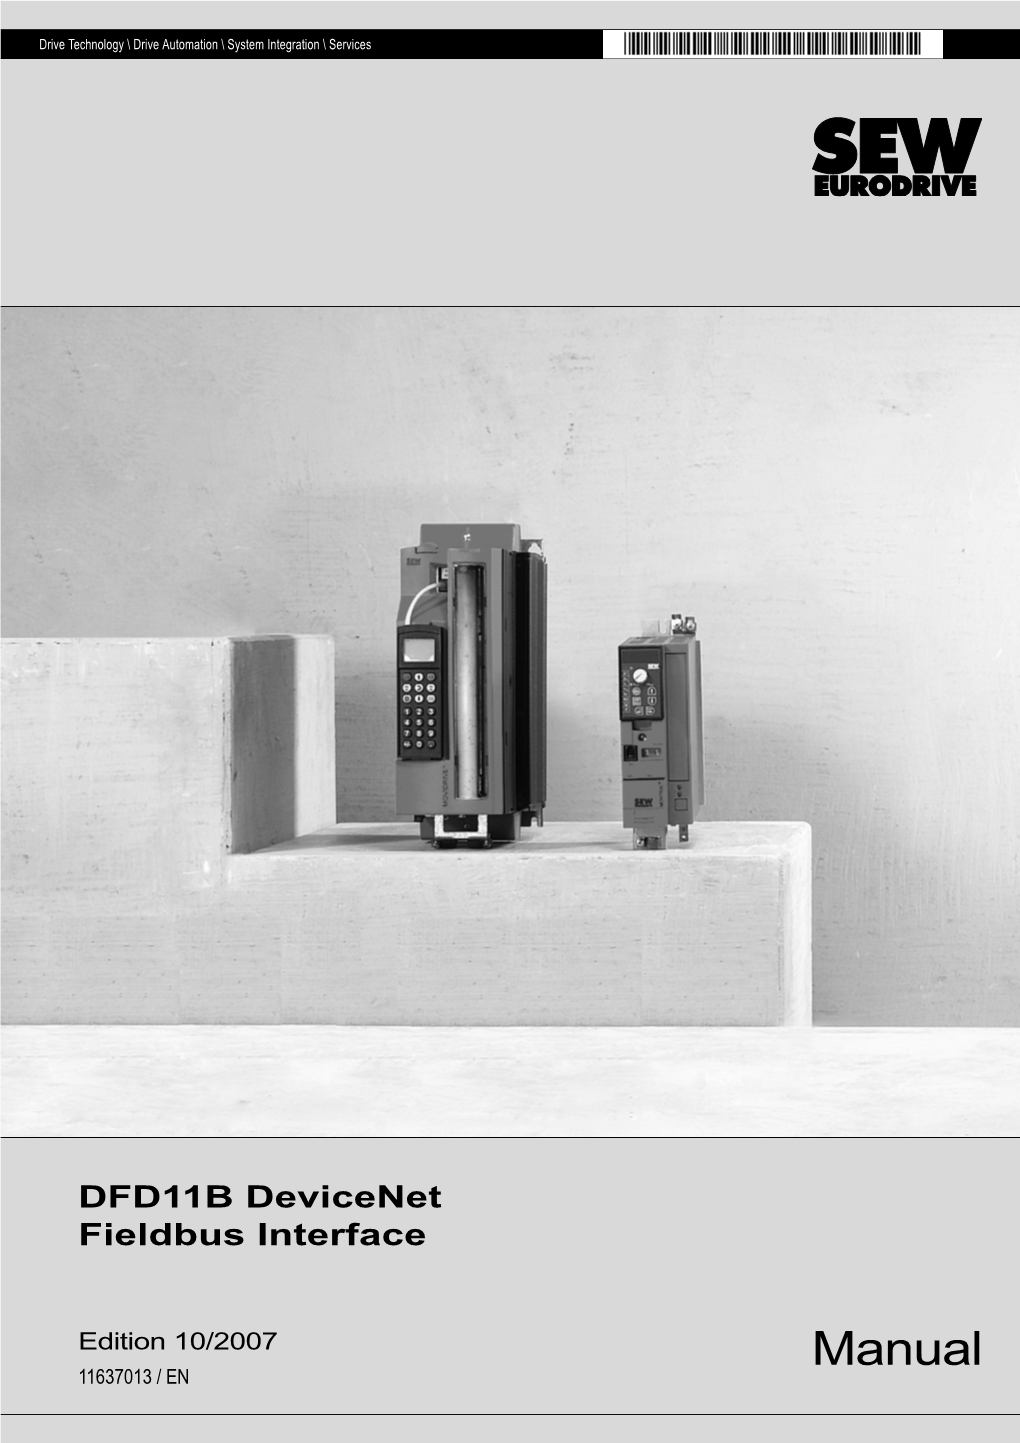 Interface Fieldbus DFD11B Devicenet / Manuals